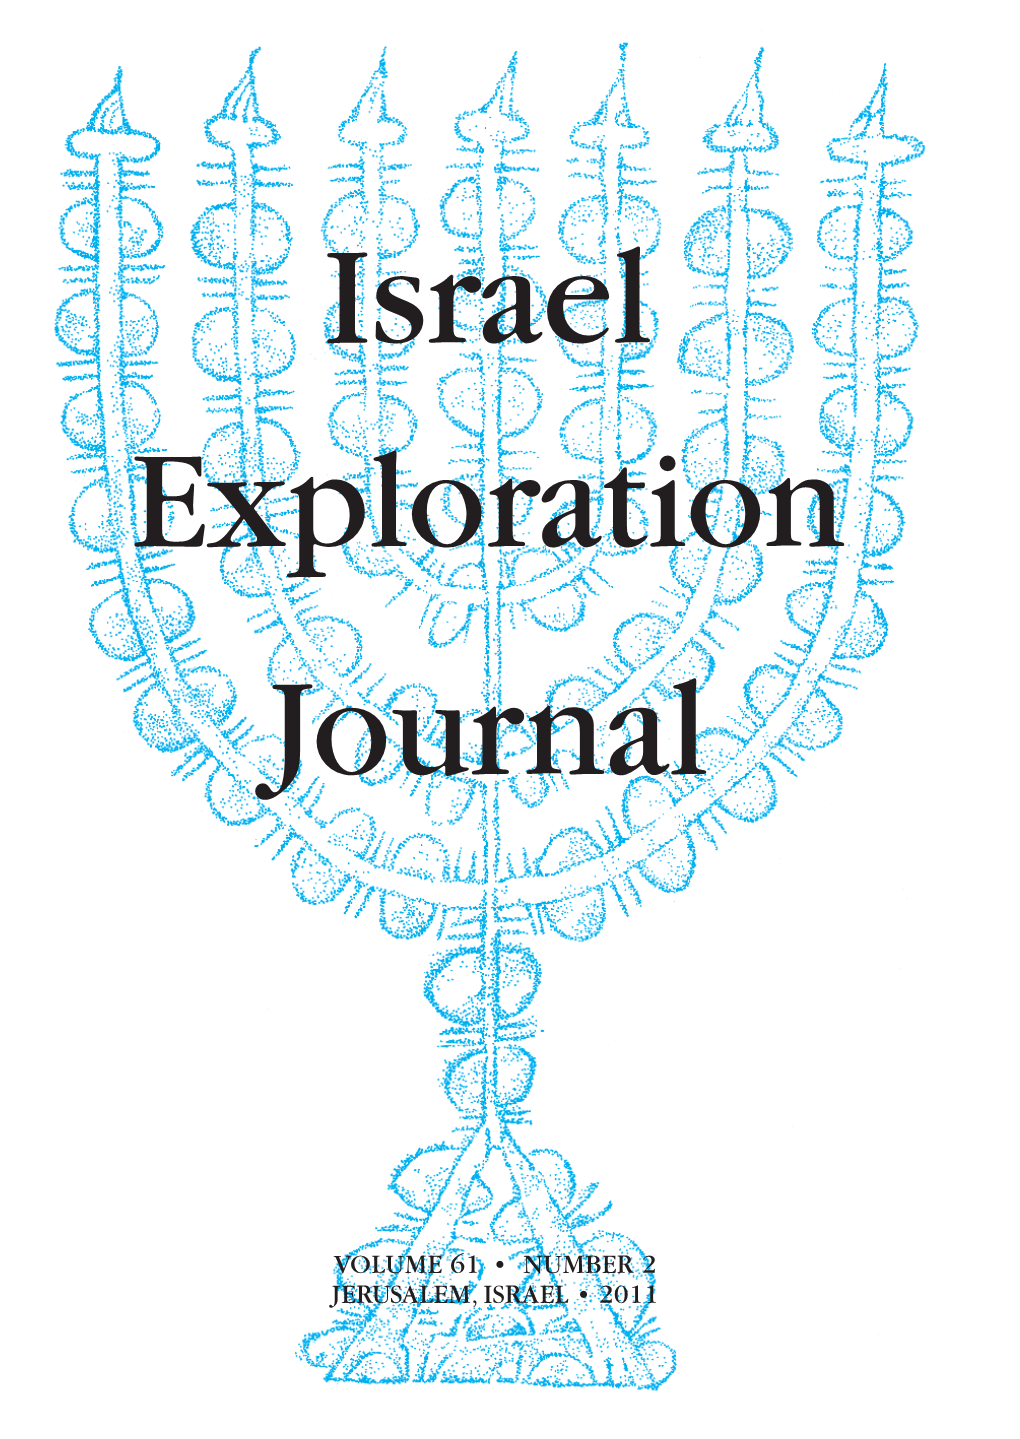 Israel Exploration Journal